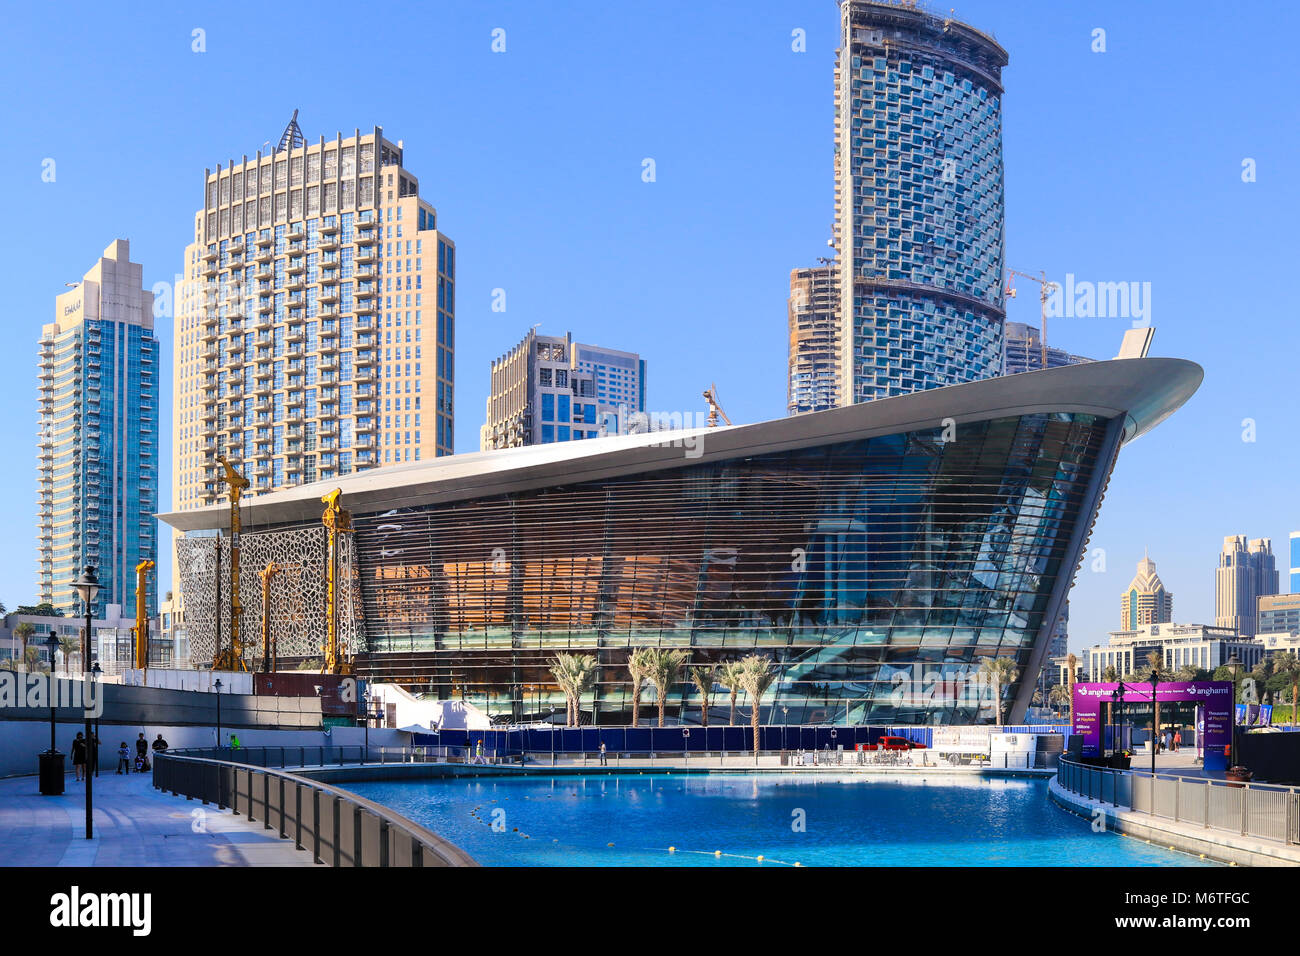 DUBAI, UAE - NOW 29: Dubai Opera Arts Centre, as seen on Now 29, 2017 at The Opera District in Downtown, Sheikh Mohammed bin Rashid Boulevard, Dubai, United Arab Emirates Stock Photo